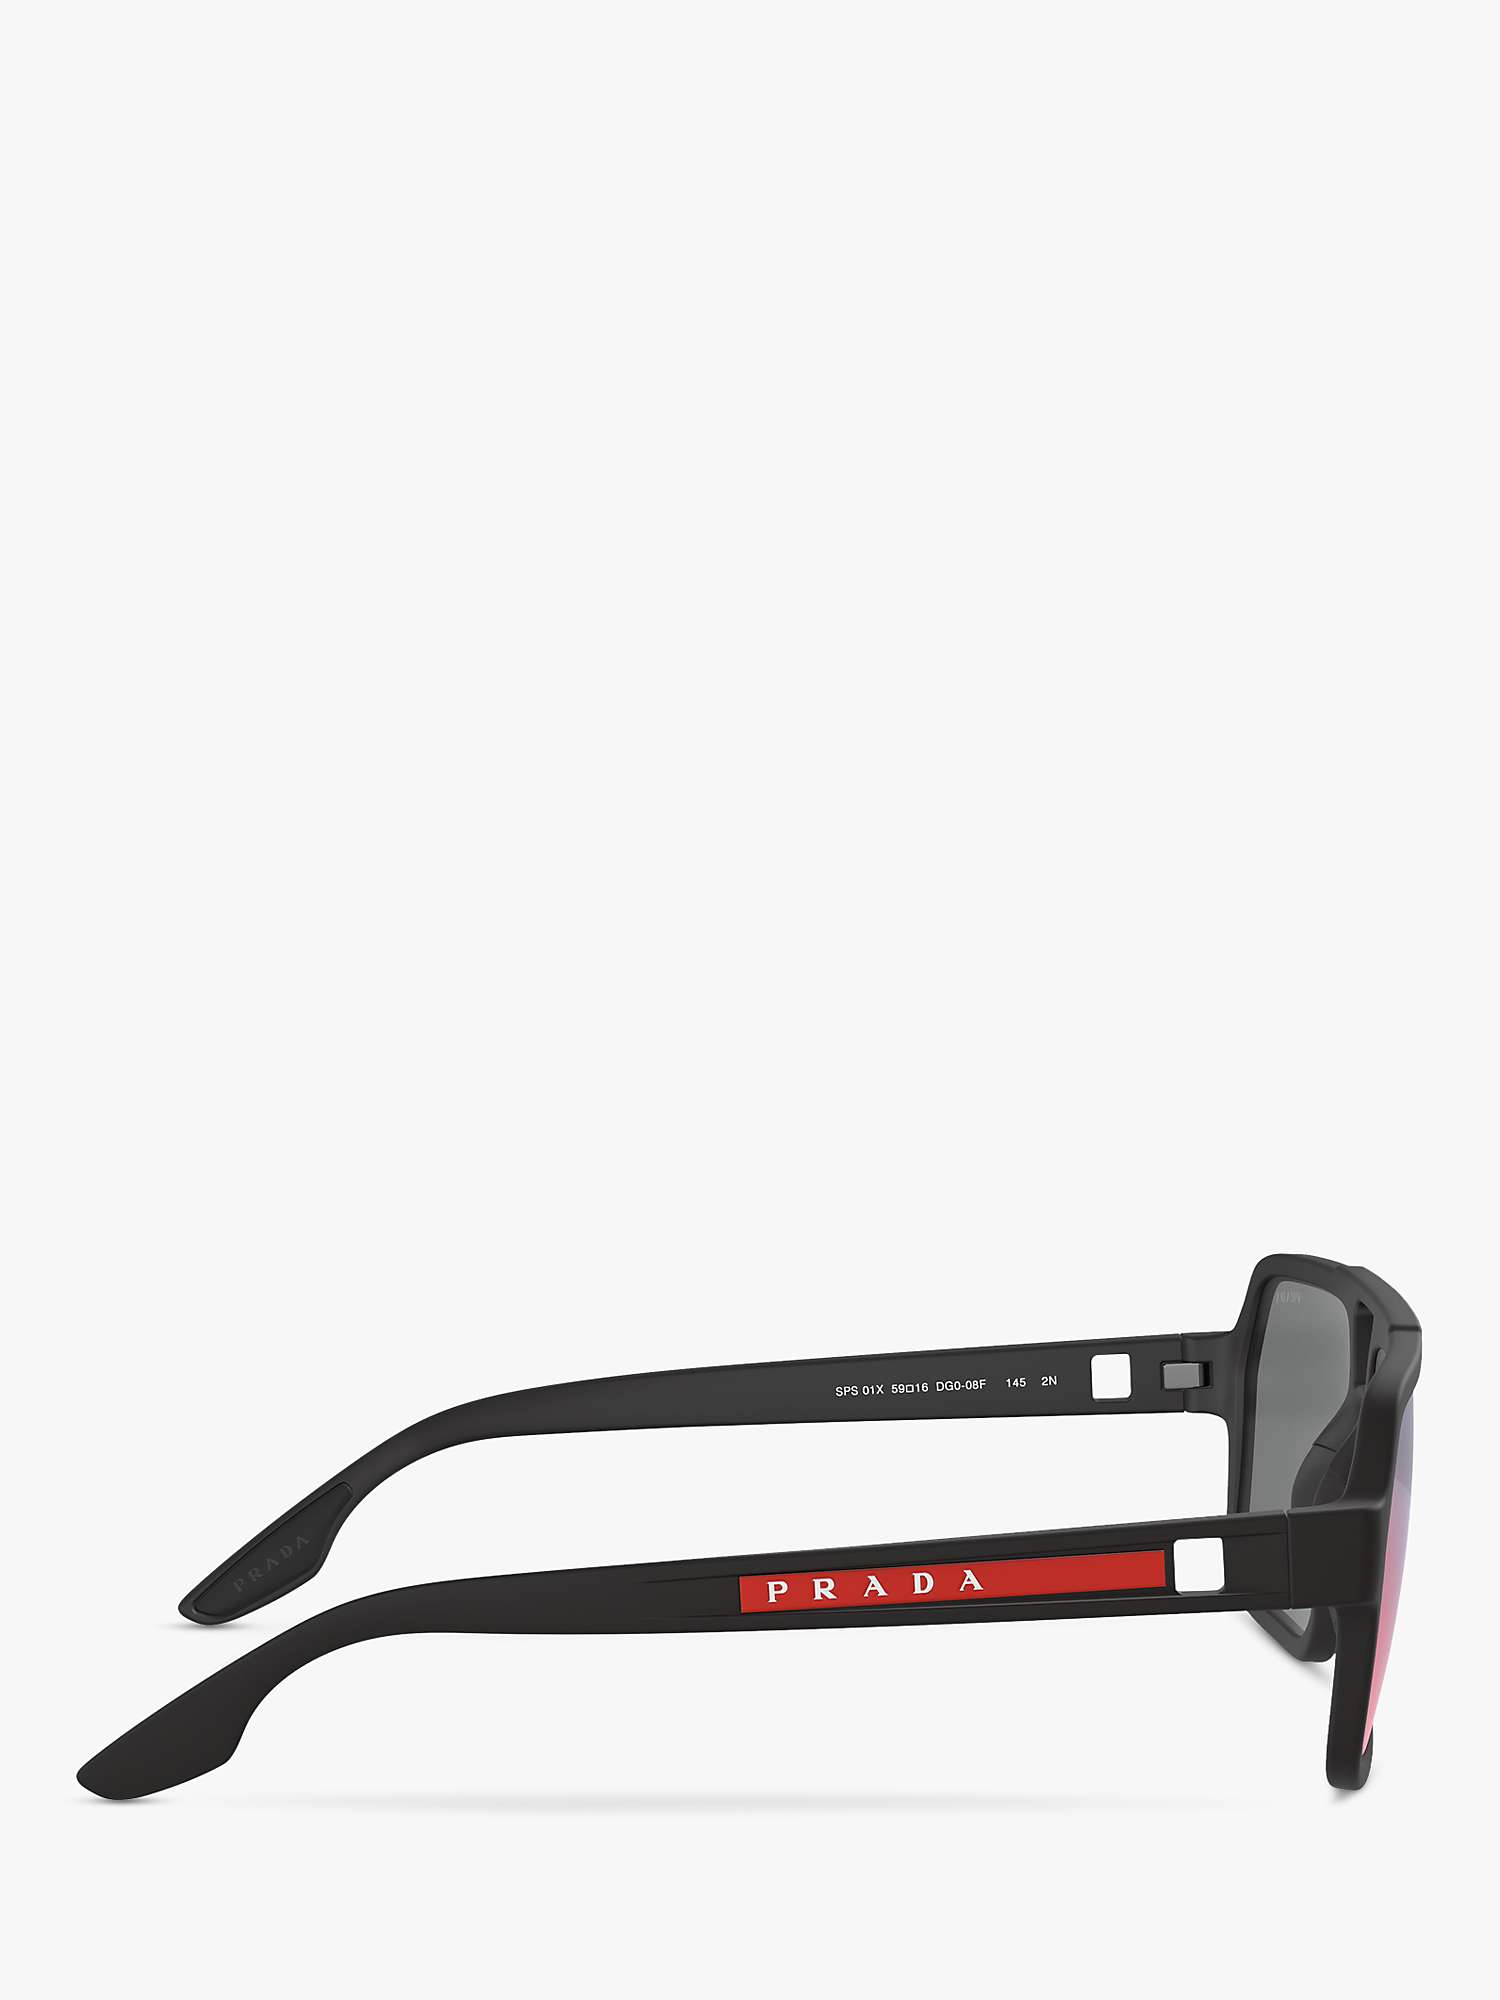 Buy Prada PS 01XS Men's Rectangular Sunglasses, Black/Mirror Grey Pink Online at johnlewis.com